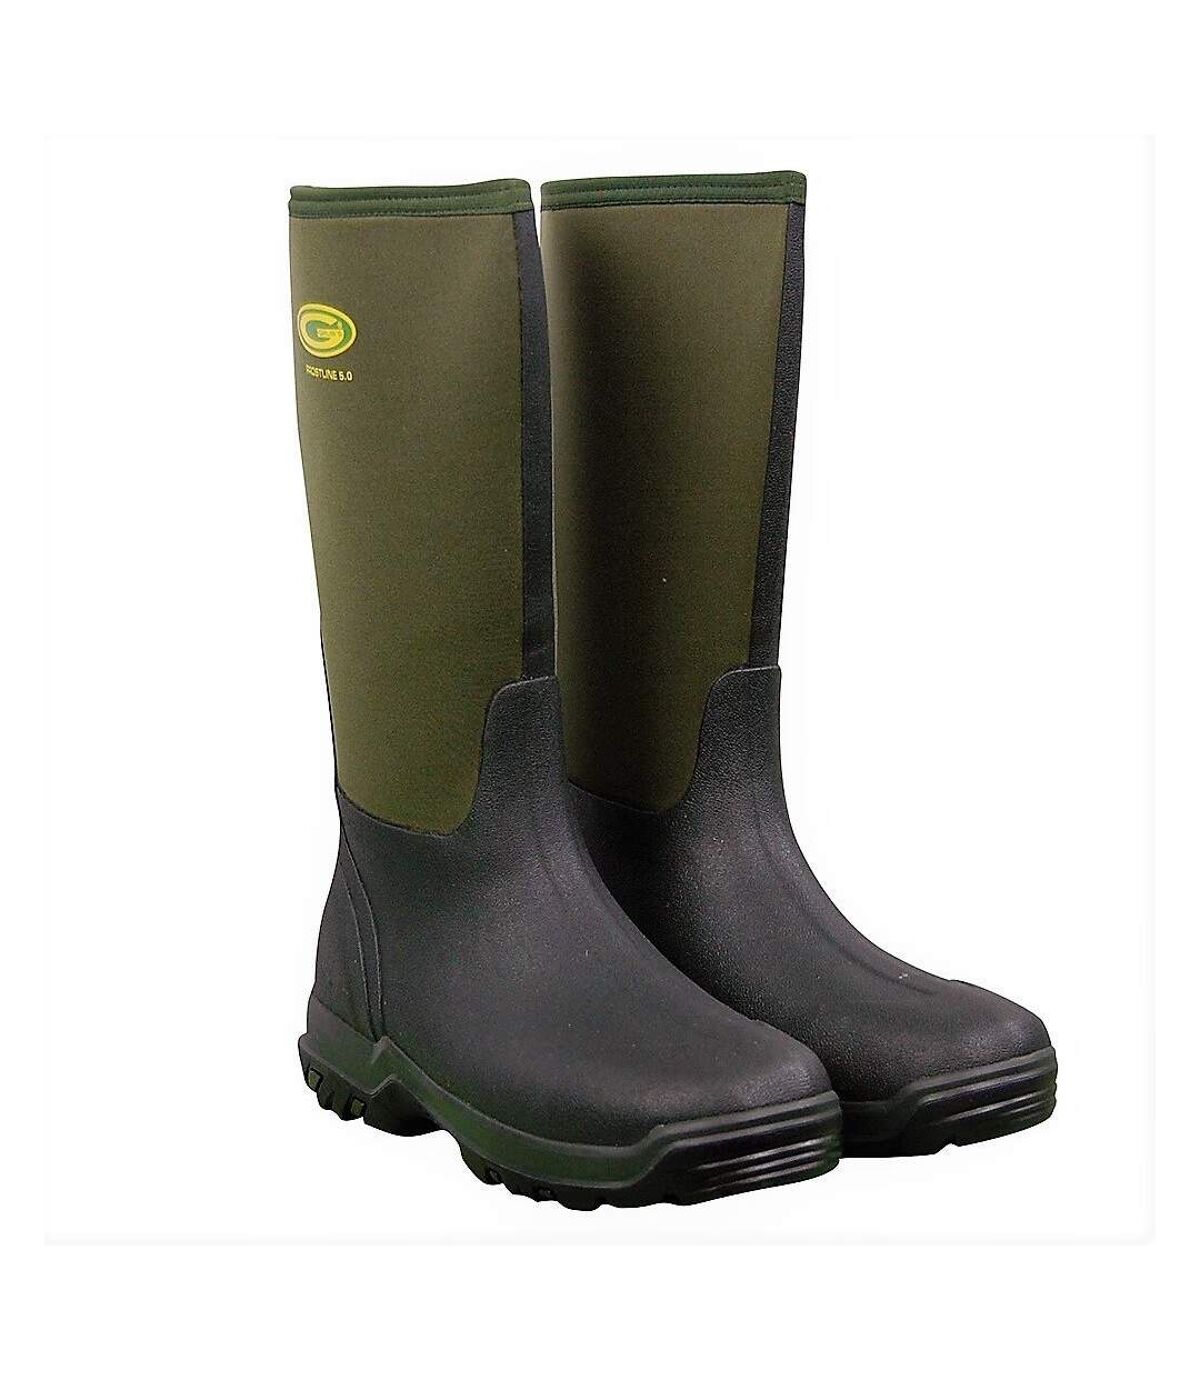 Grubs Womens/Ladies Frostline Boots (Moss Green) - UTTL1512